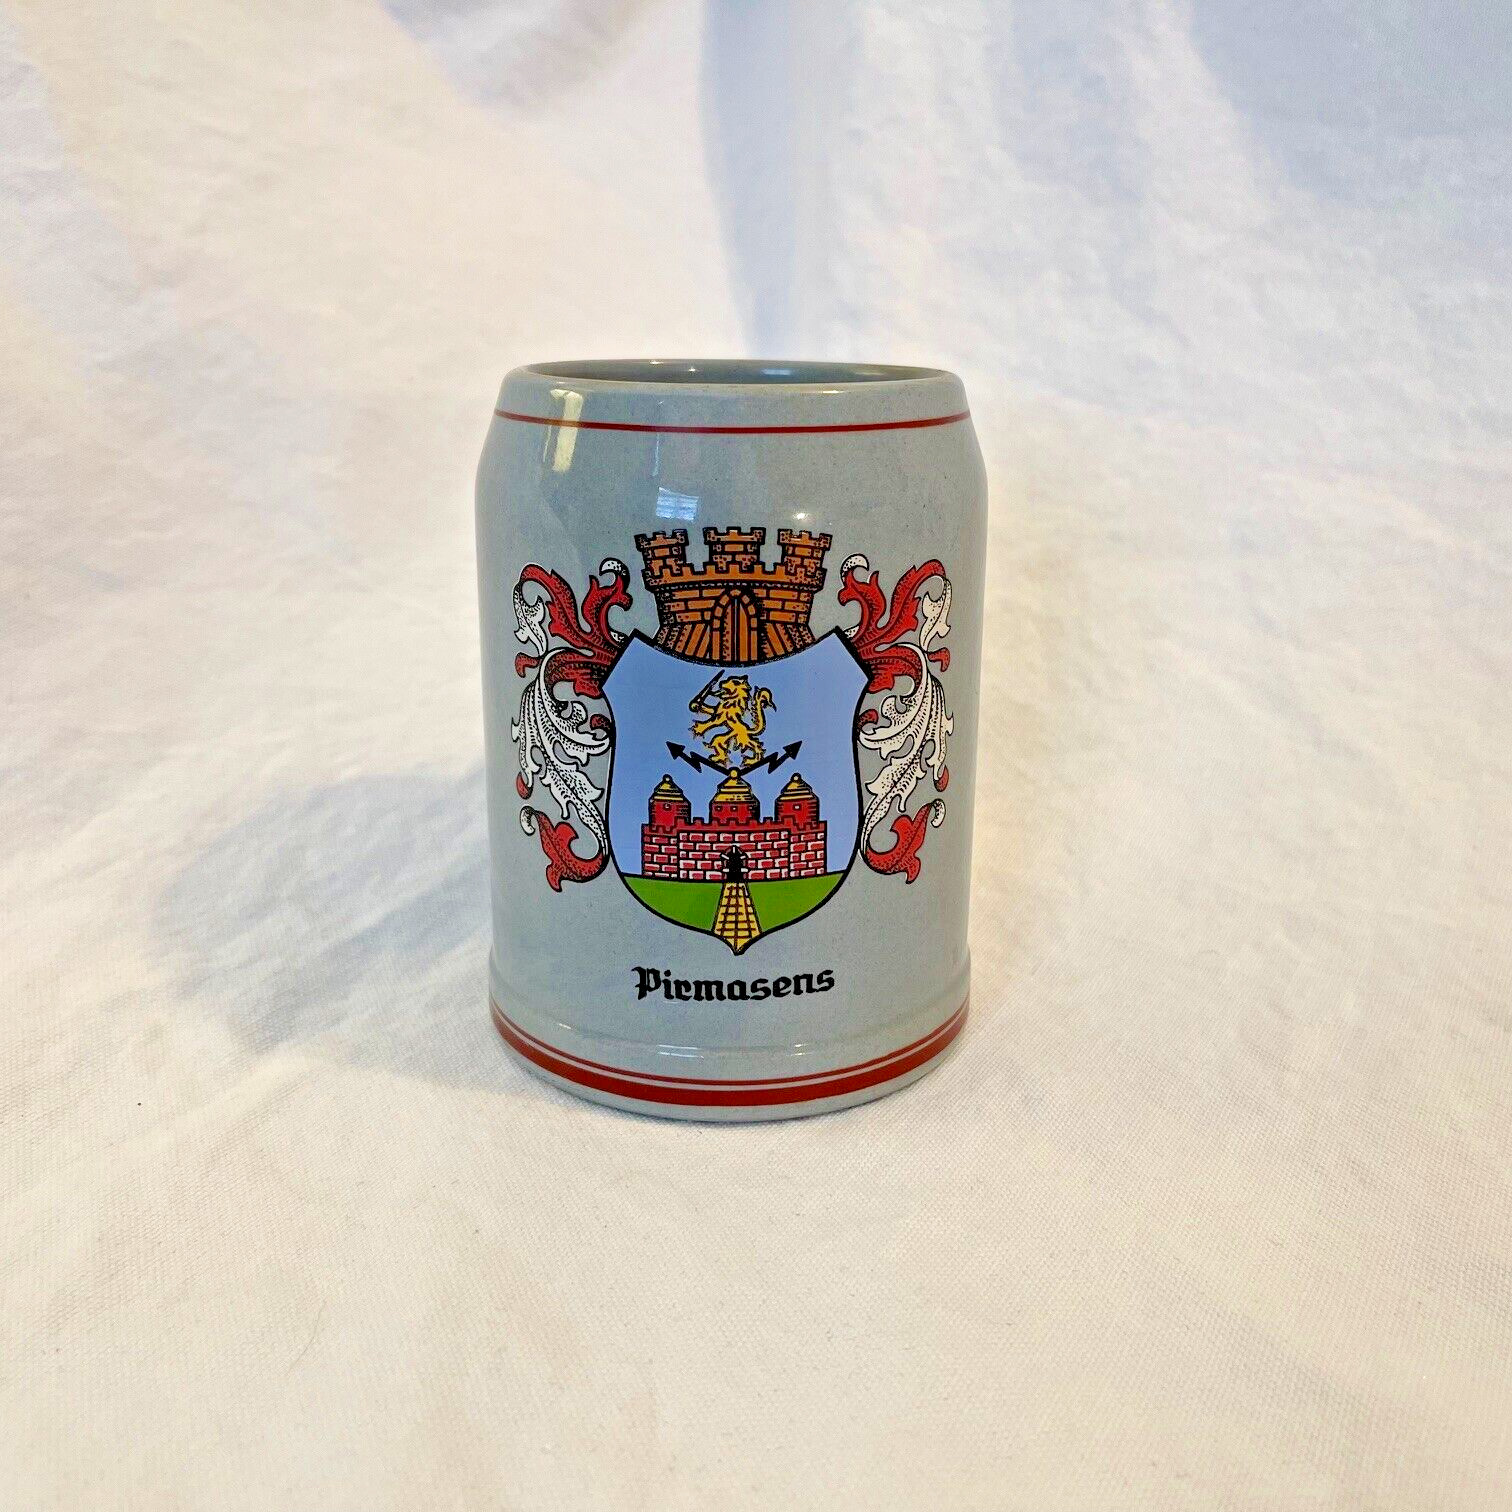 Vintage 1970s German Pirmasens Lions Crest Ceramic Beer Stein Mug 0.5L